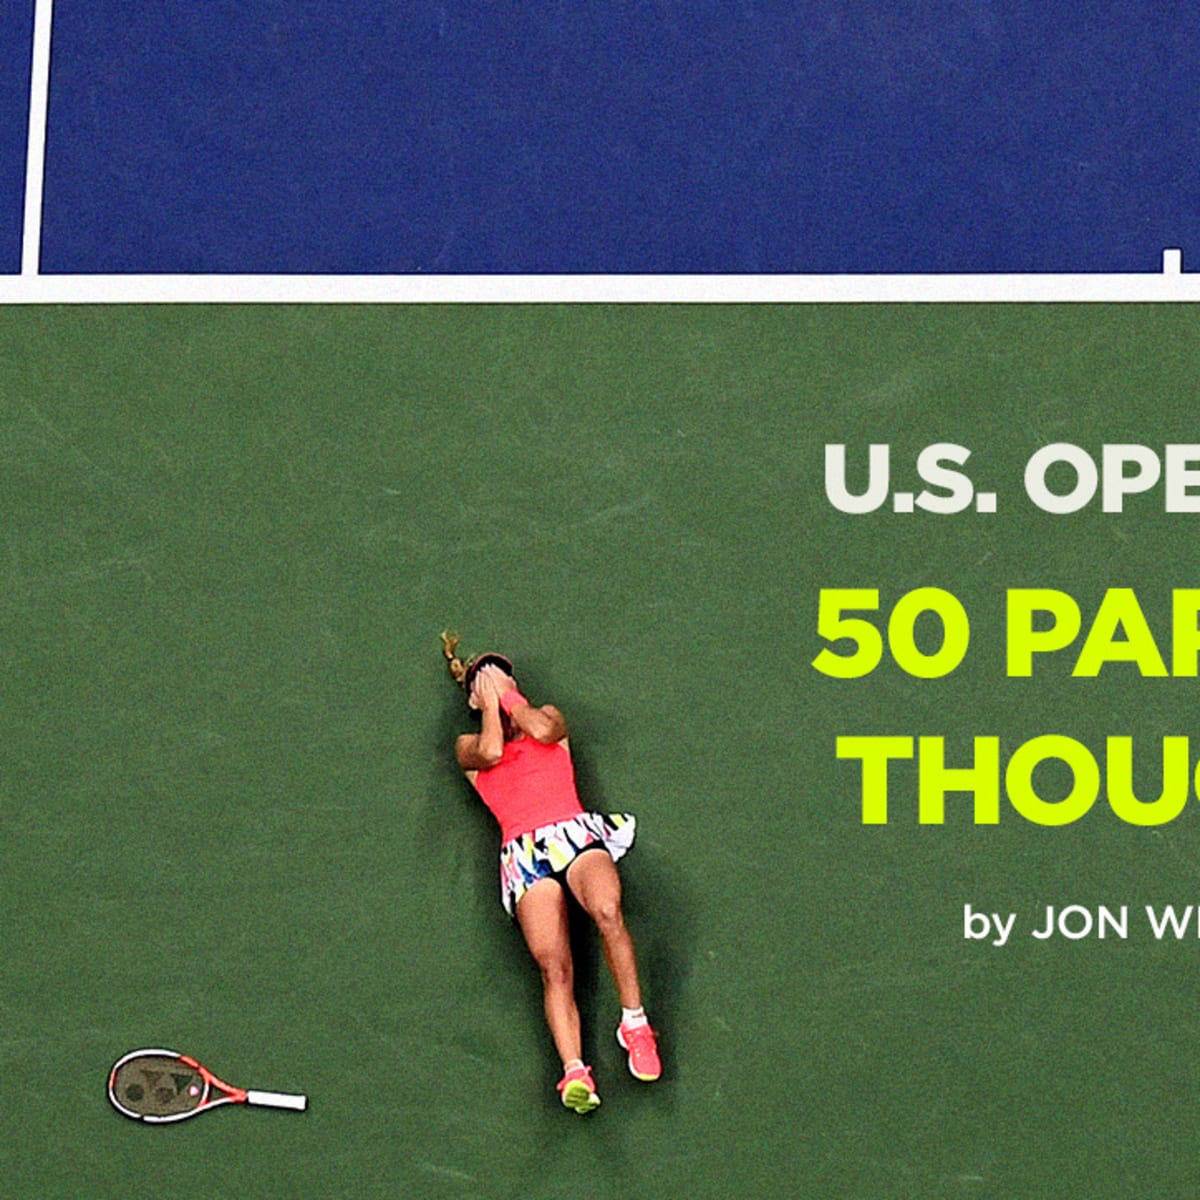 ESPN Commentators' Major Blunder Involving Madison Keys' US Open